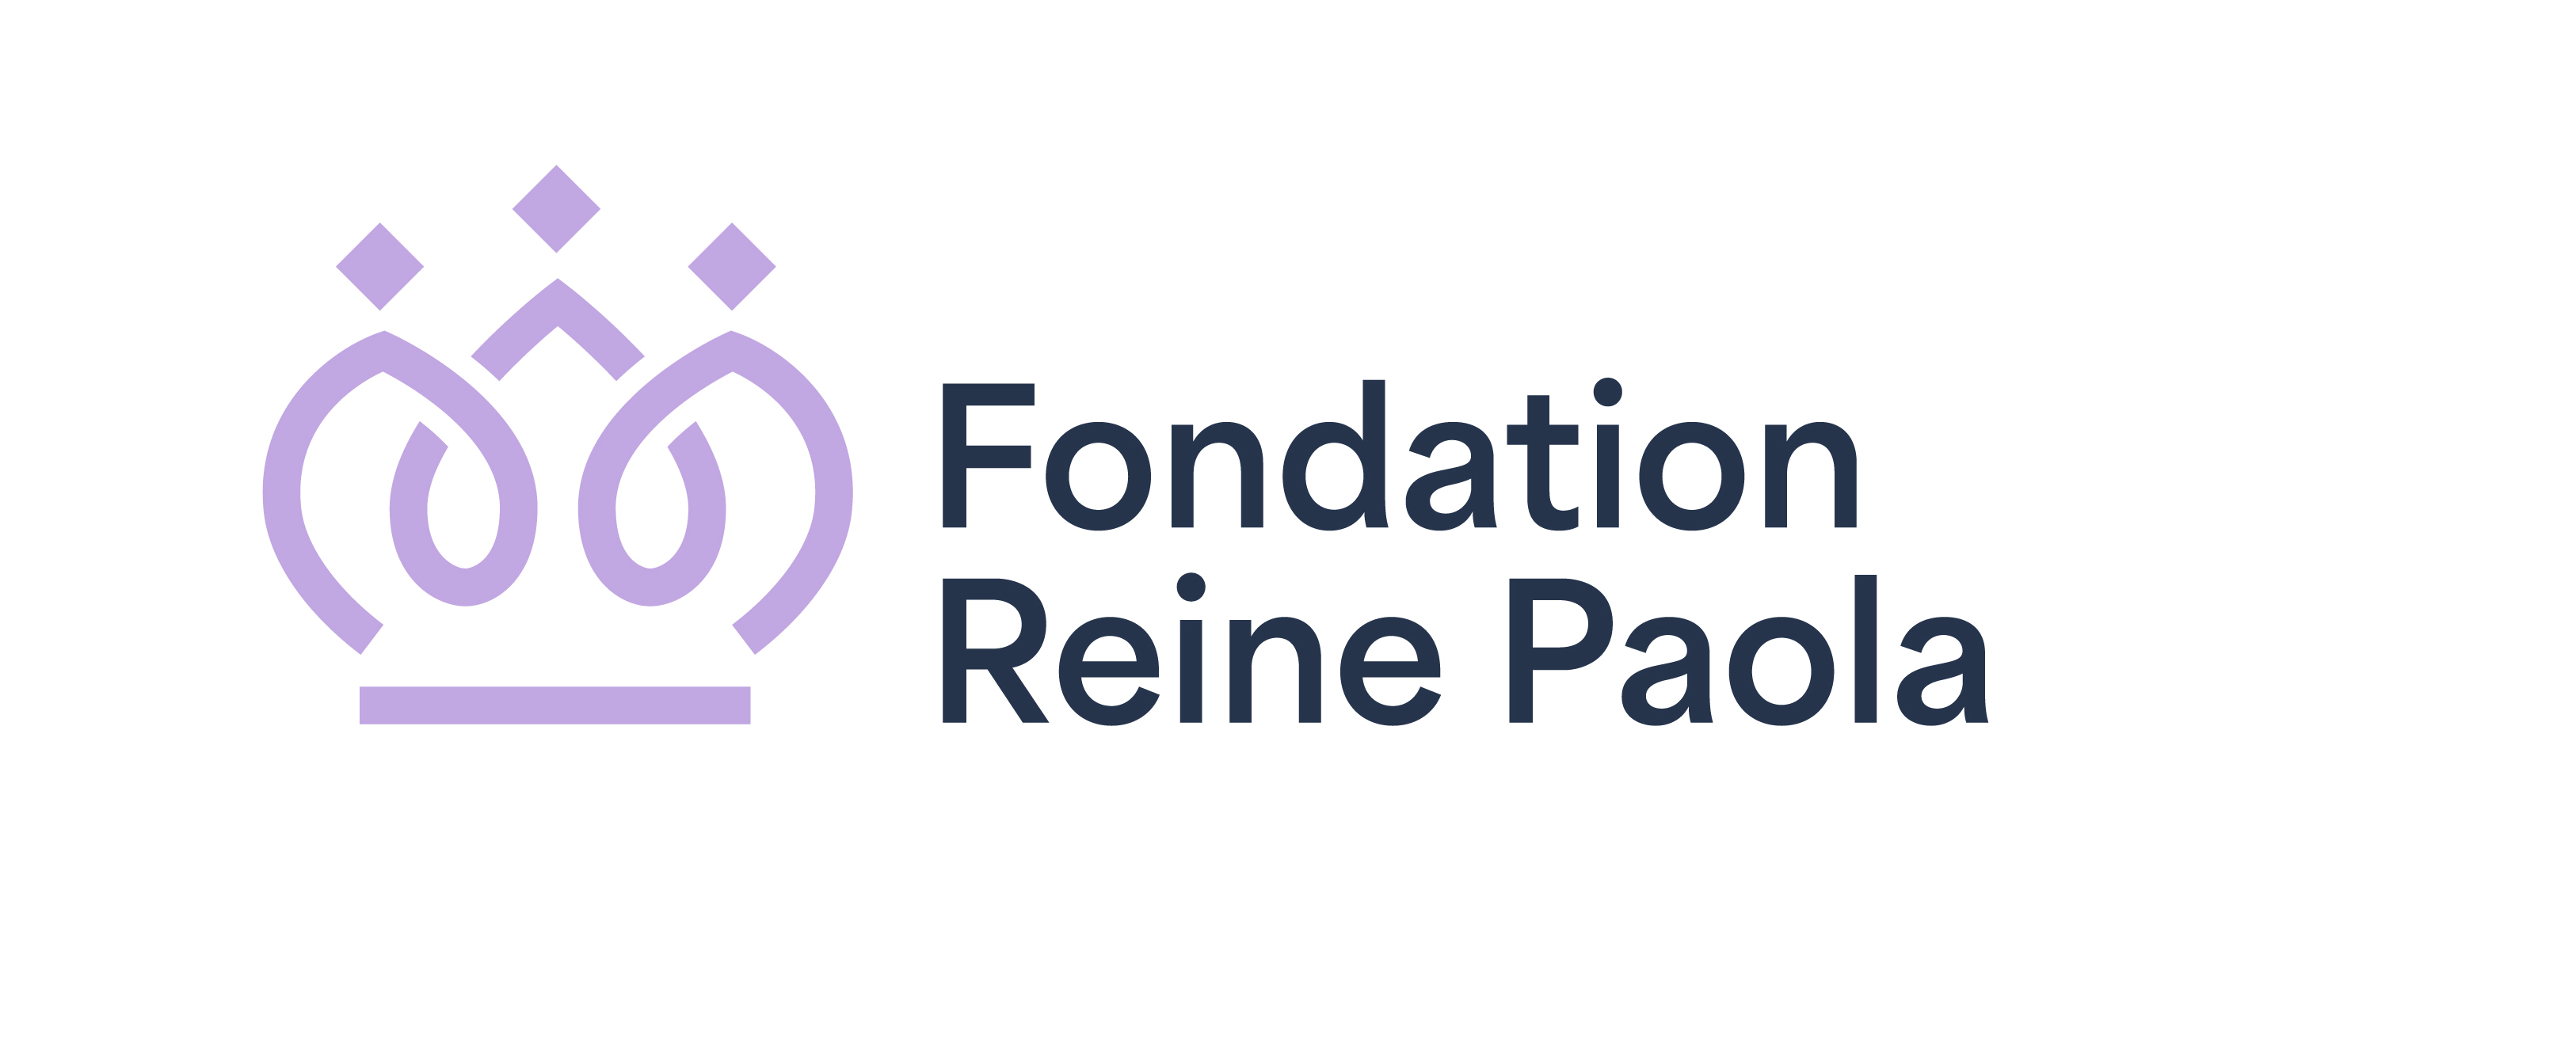 Fondation Reine Paola